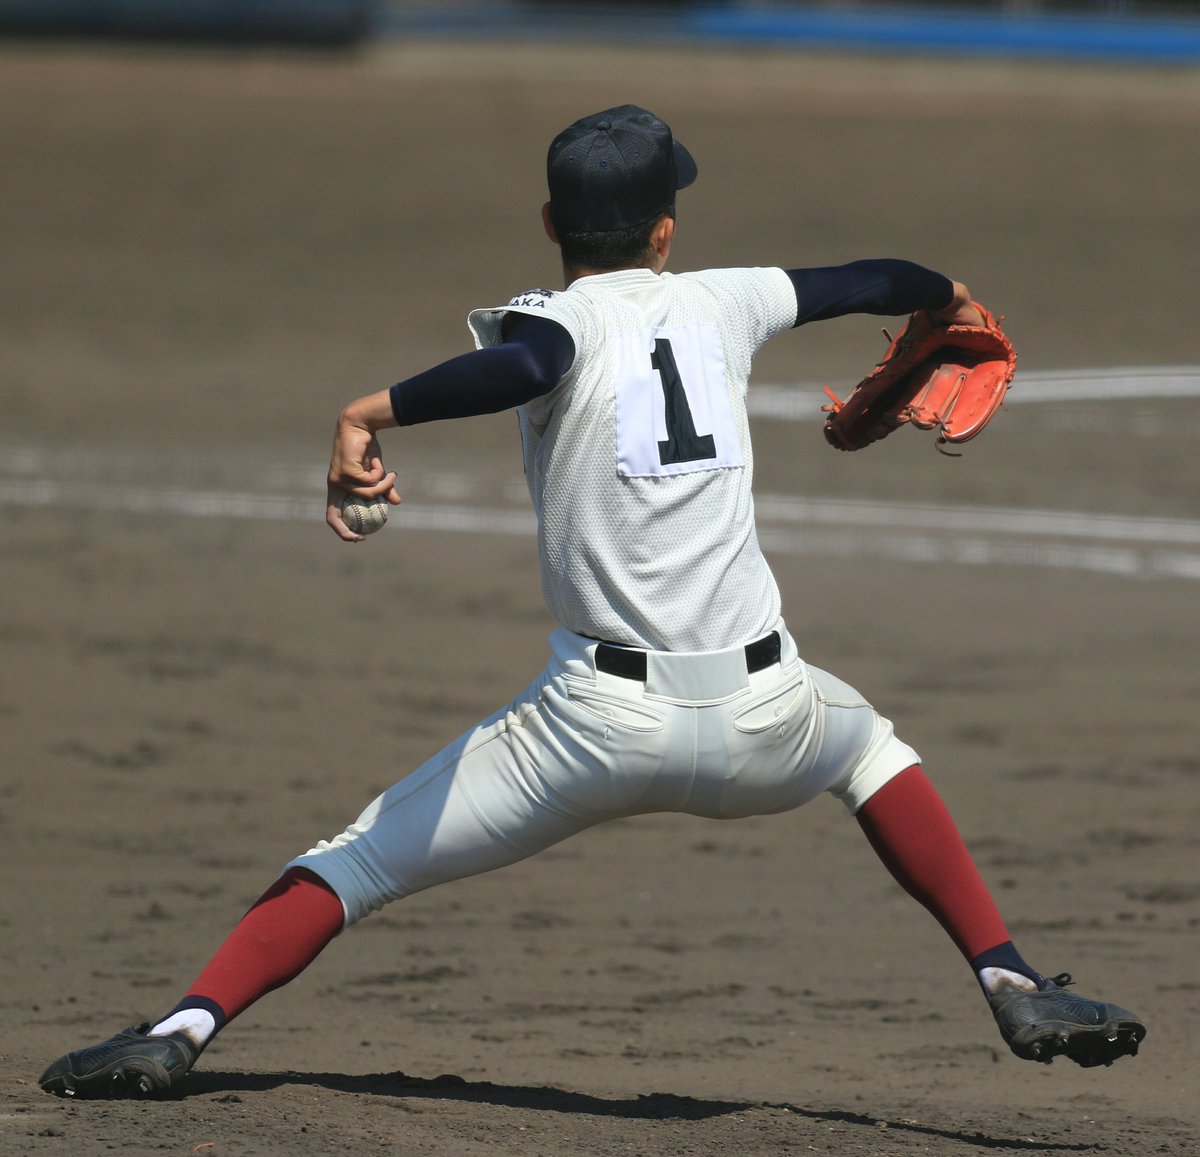 Nobashi Pa Twitter 平成30年度 近畿地区高校野球 5回戦 大阪桐蔭 横川凱君 背番号1 選抜の時は10番でしたよね カッコイイと思ったらrt